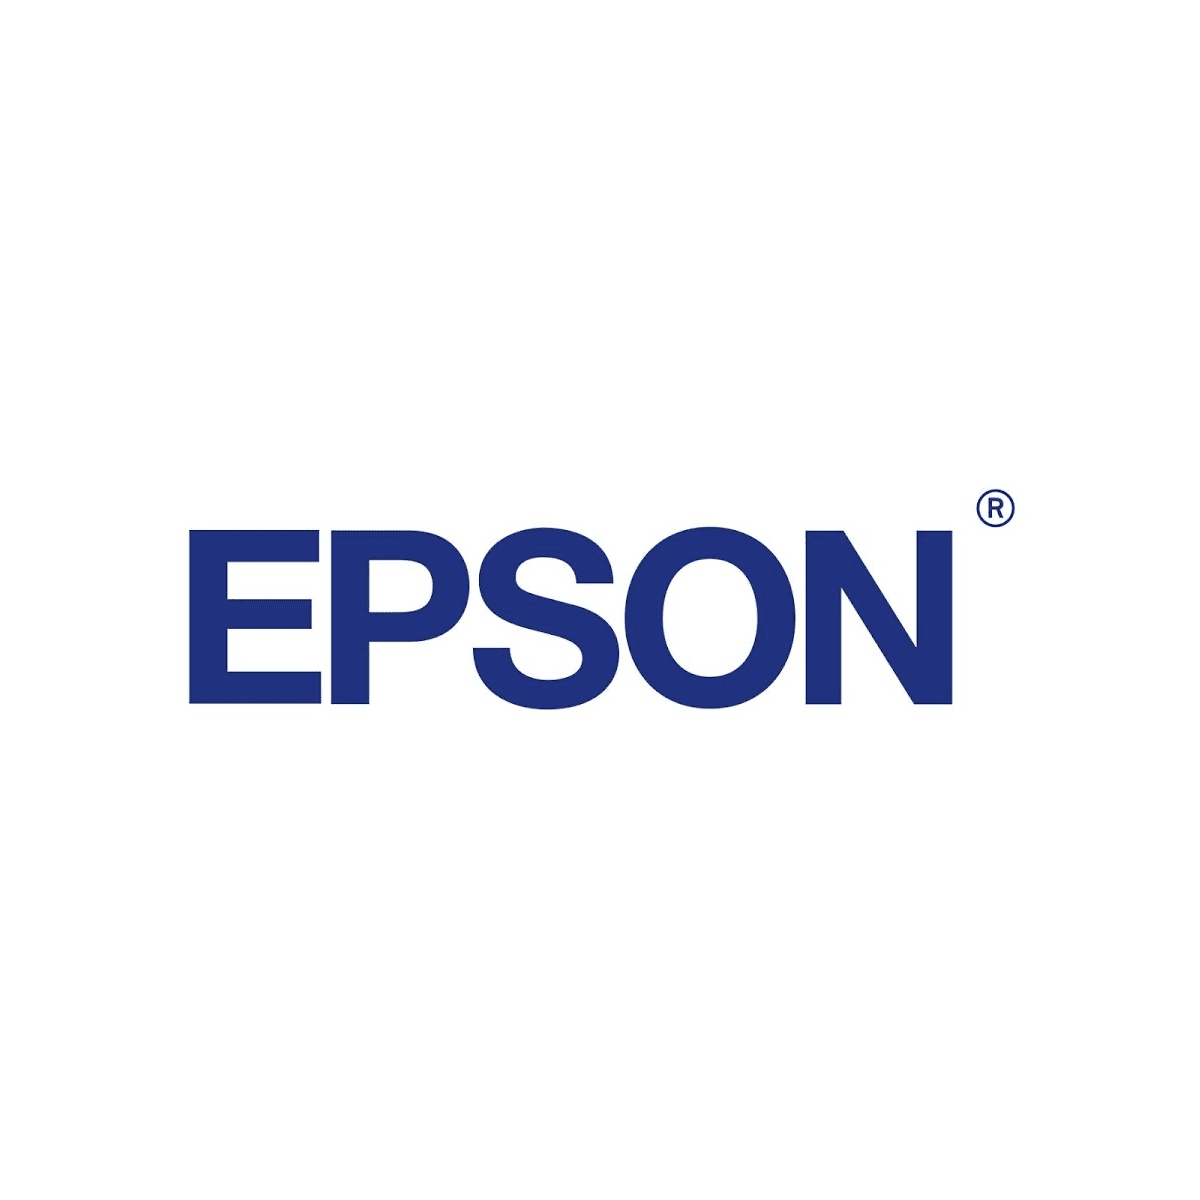 Epson Logo Spartoner24